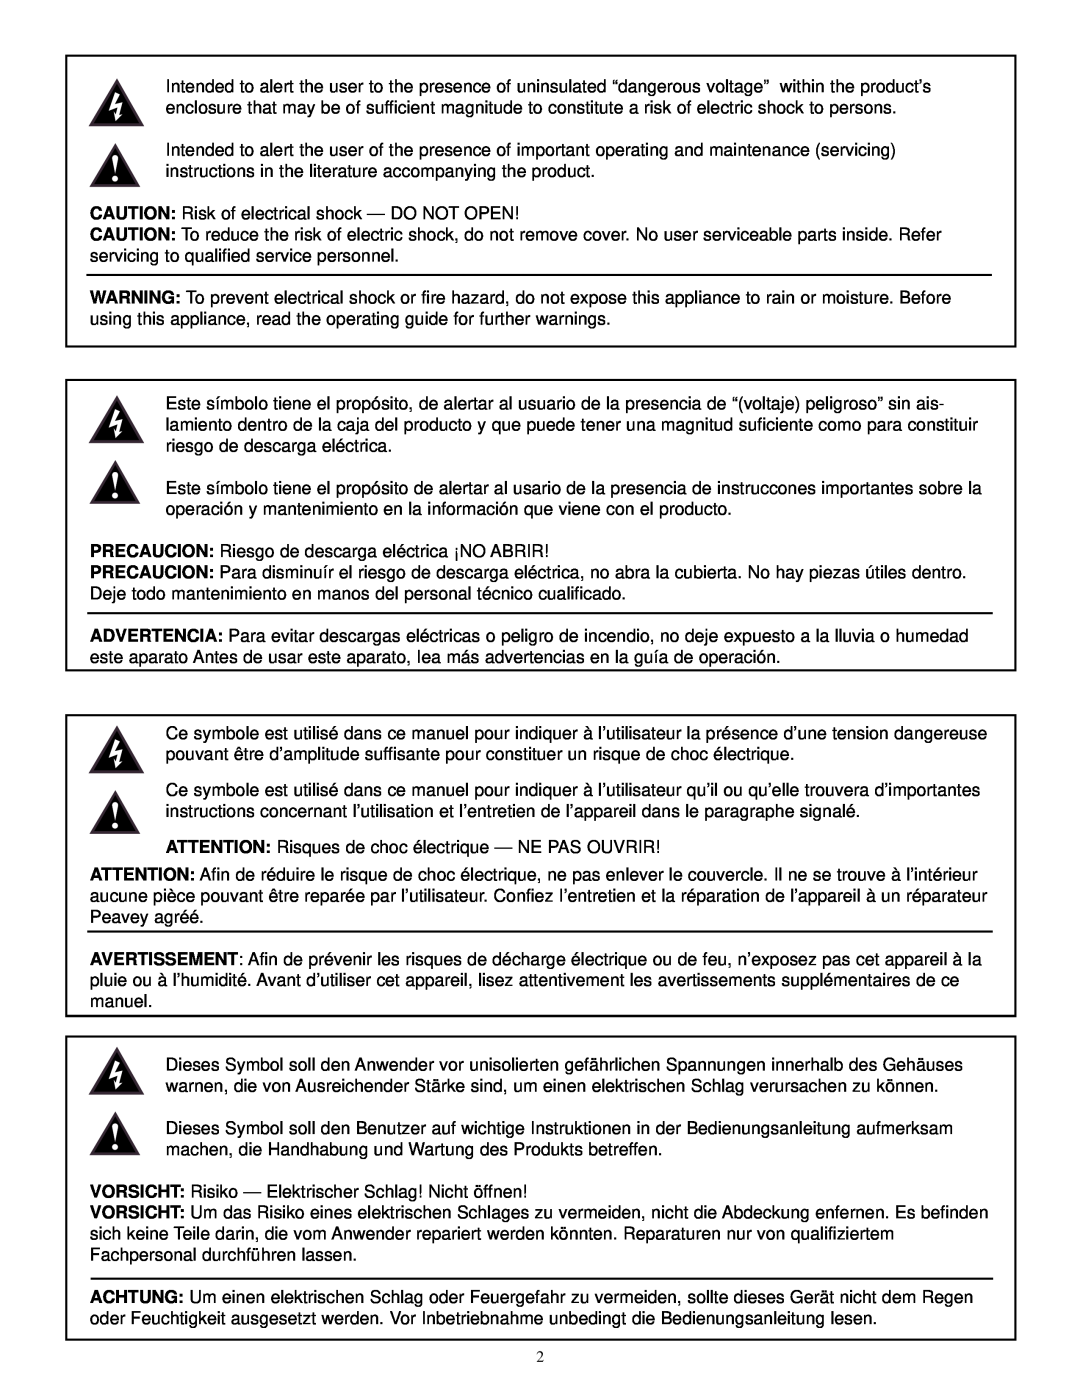 Musica 2000 manual CAUTION Risk of electrical shock - DO NOT OPEN, PRECAUCION Riesgo de descarga eléctrica ¡NO ABRIR 